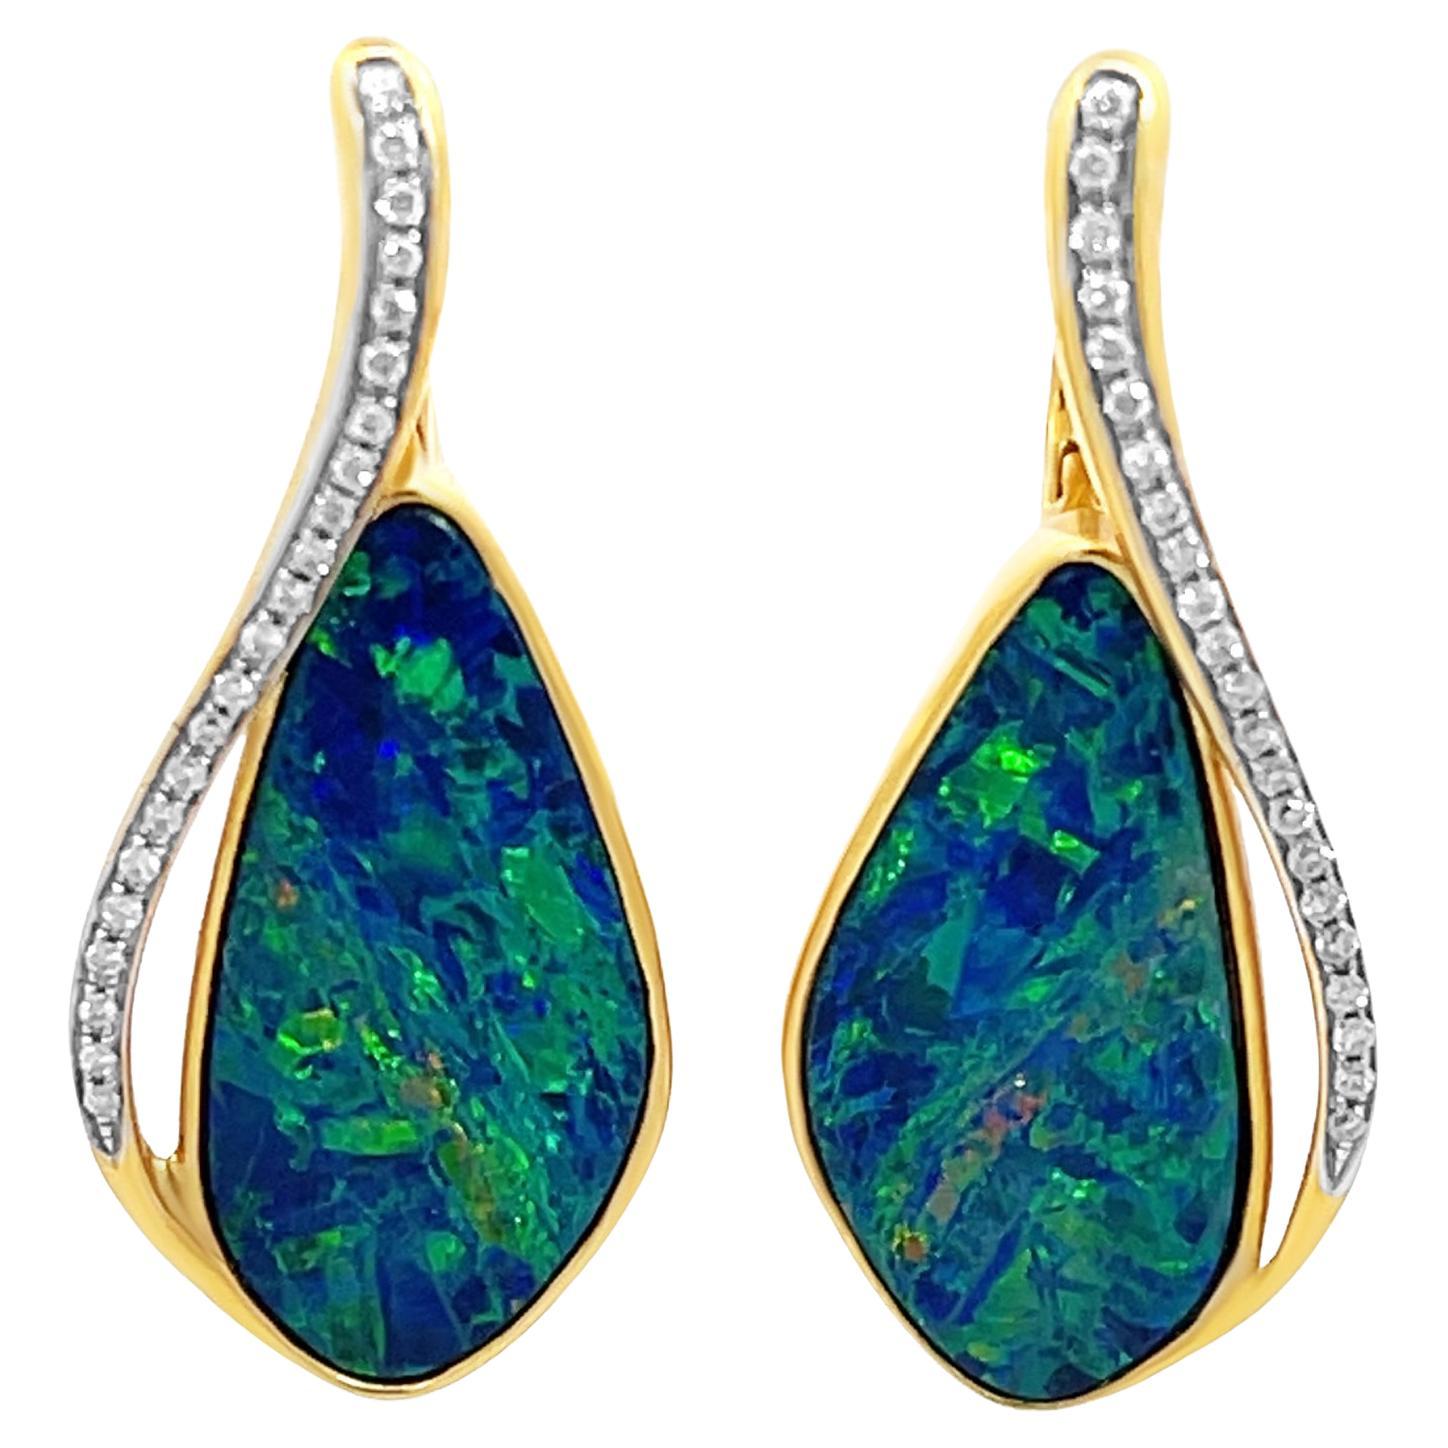 Premium Quality Australian 12.22ct Opal Doublet Earrings 18K Gold with Diamonds